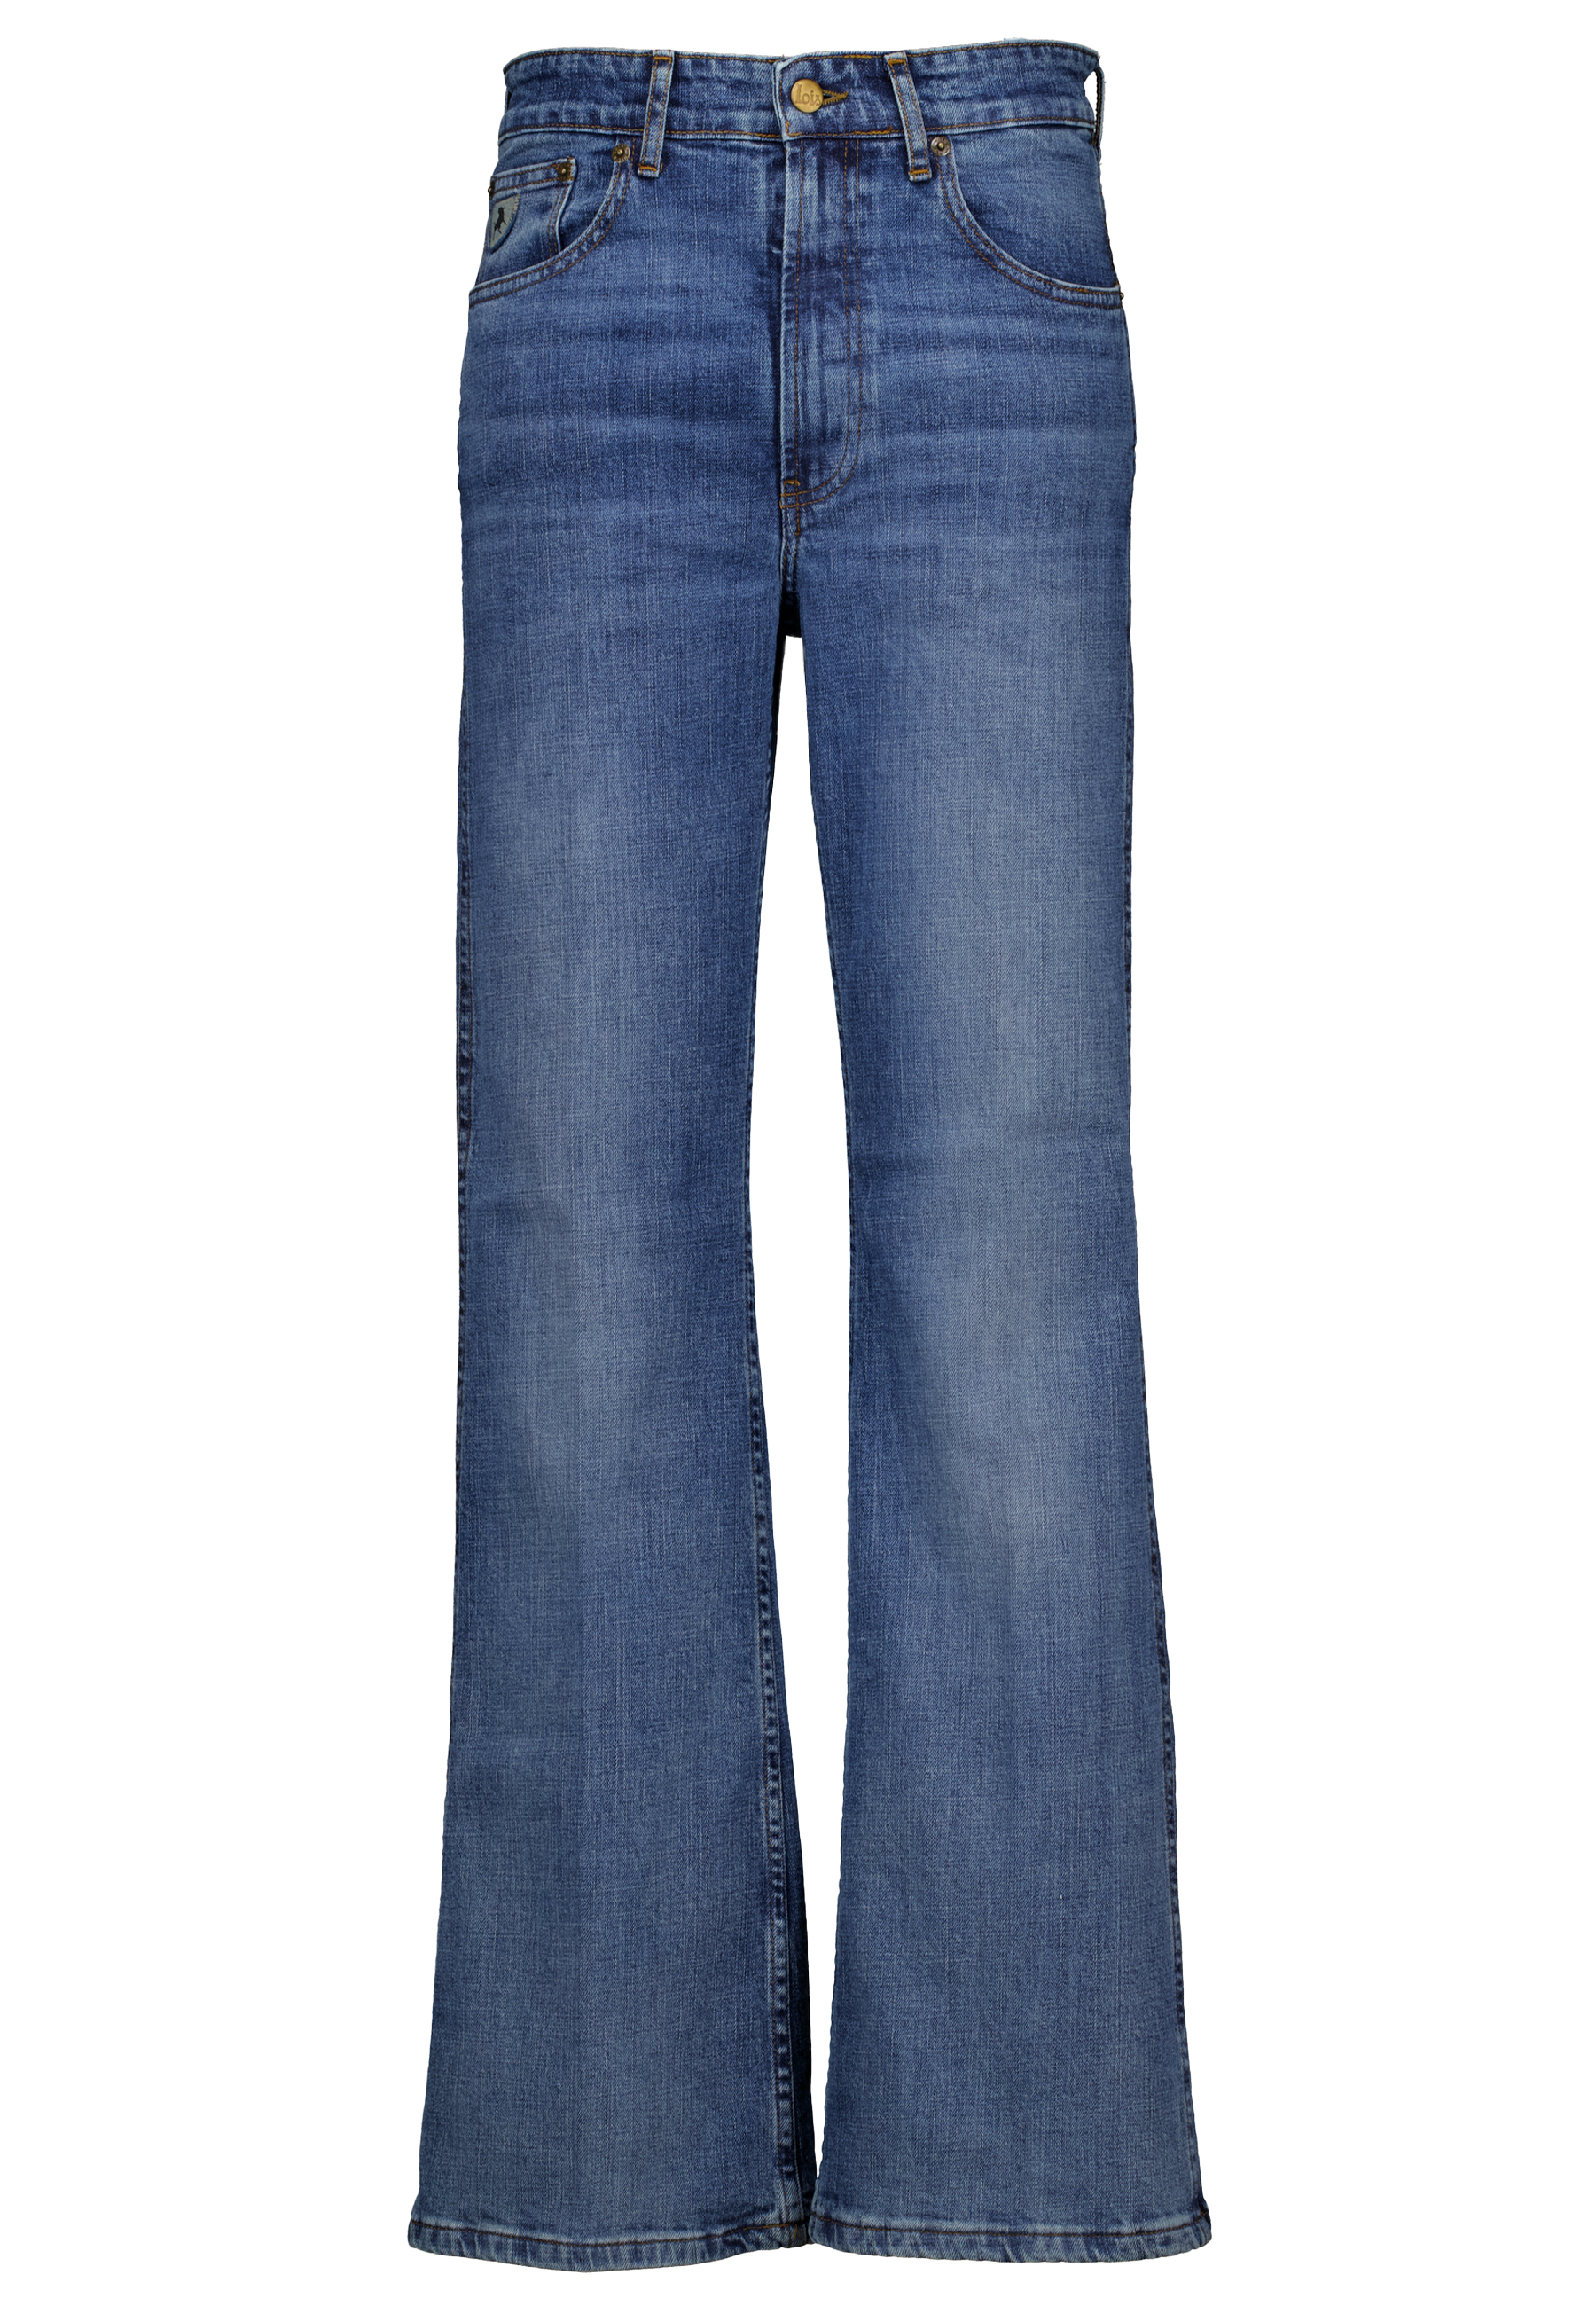 Lois Riley jeans blauw Dames maat 32/32